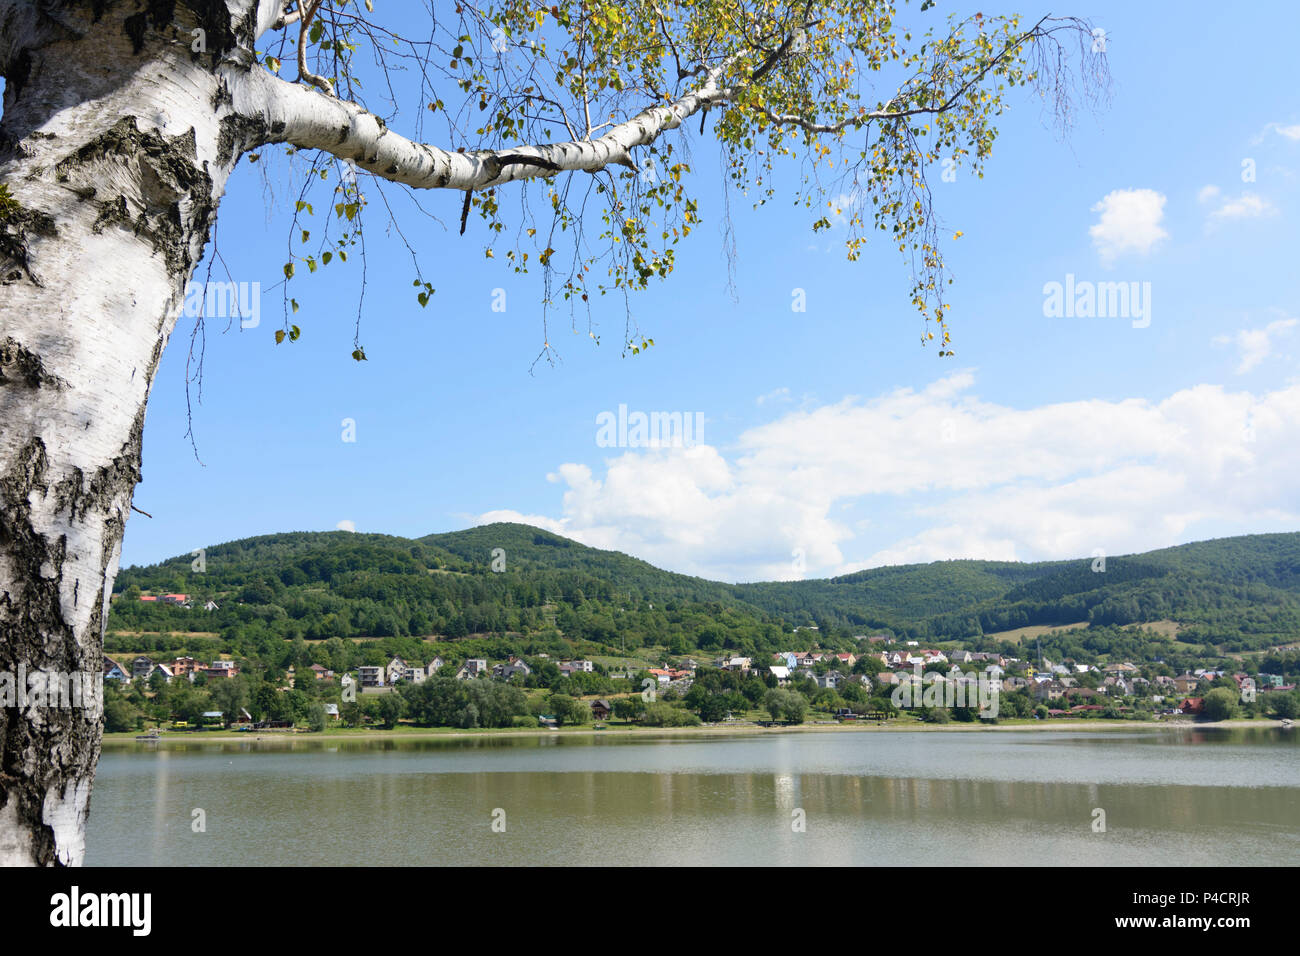 Nosice, Nosice Reservoir of Vah river, Slovakia Stock Photo